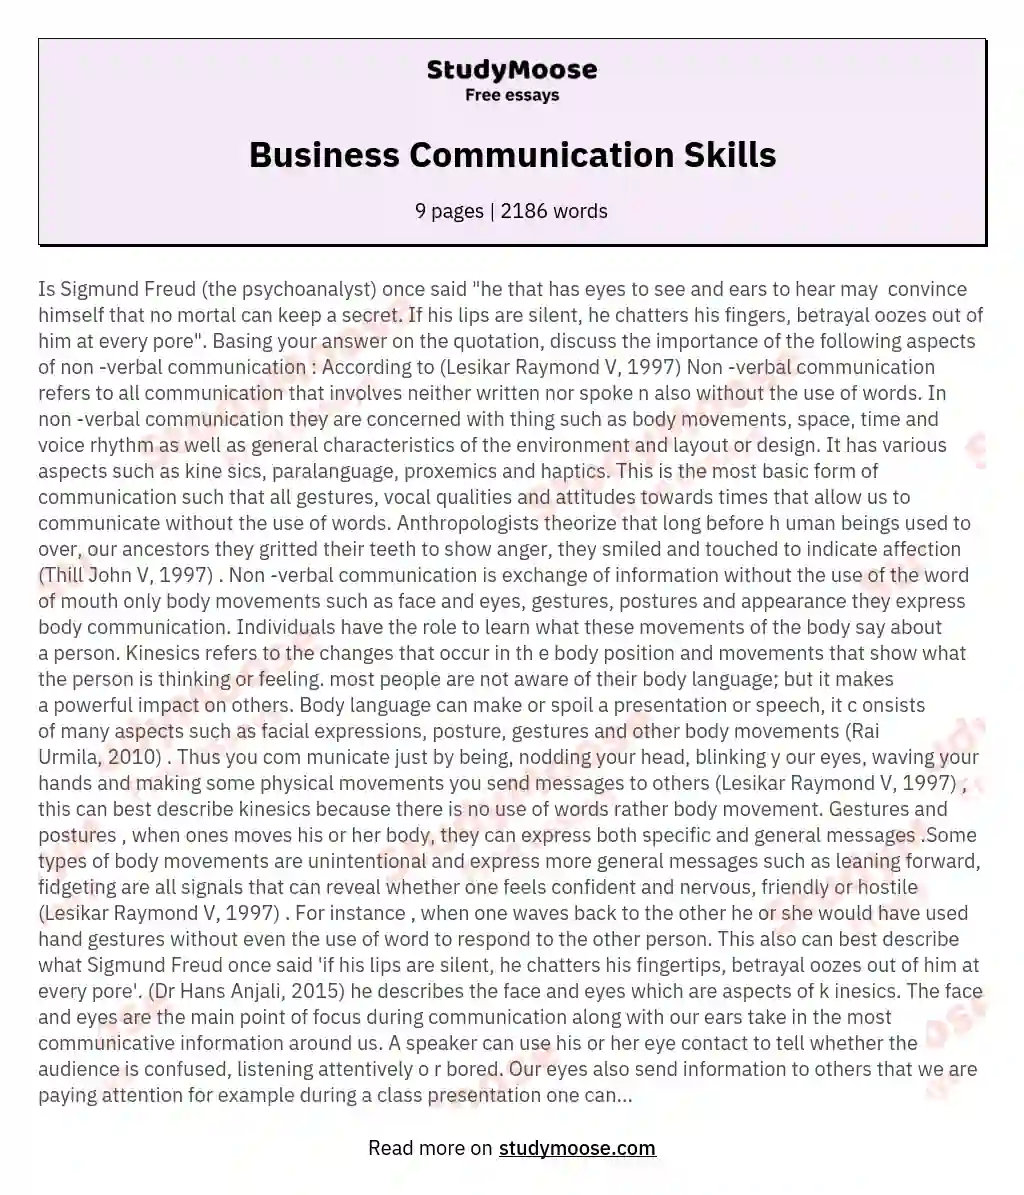 Business Communication Skills essay